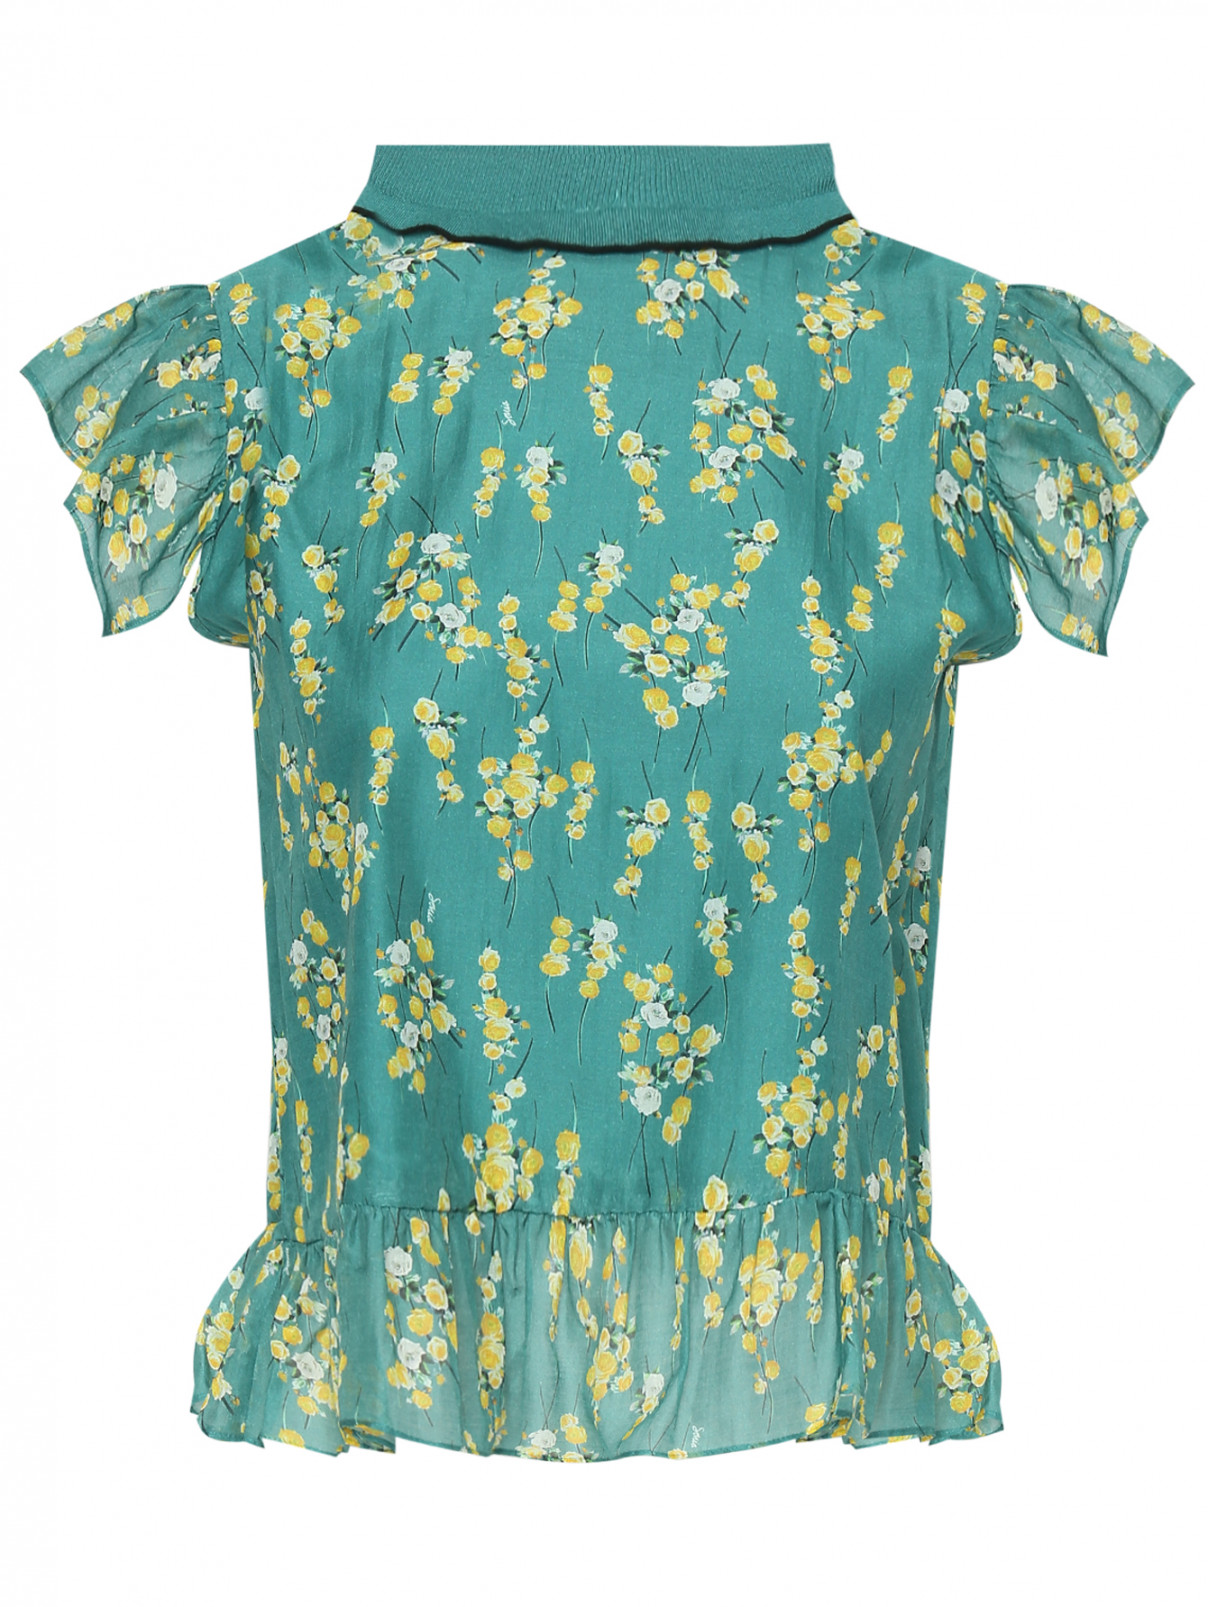 Блуза из хлопка и шелка Sonia Rykiel  –  Общий вид  – Цвет:  Узор